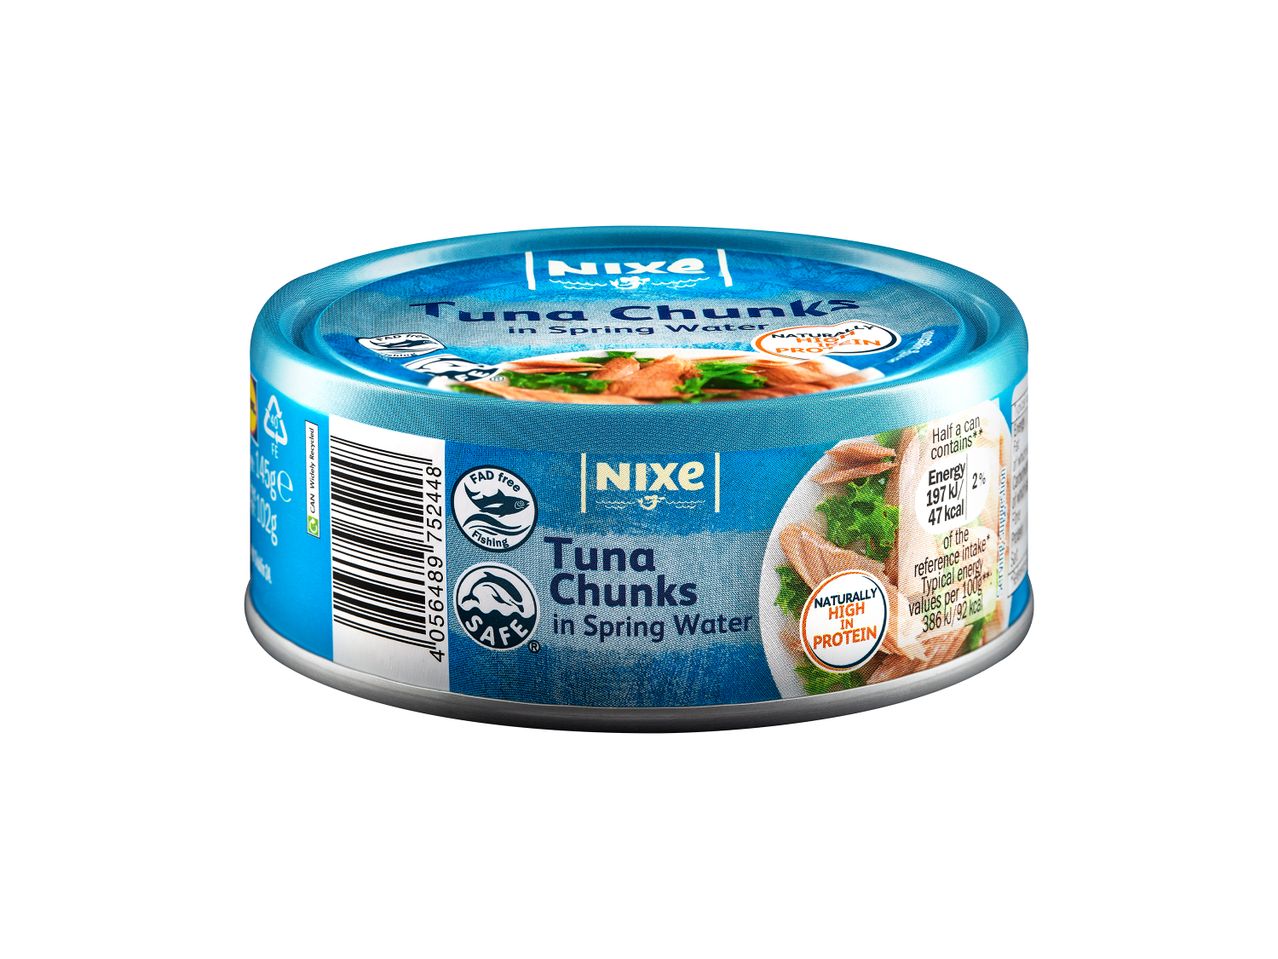 Go to full screen view: Nixe Tuna Chunks in Spring Water - Image 1